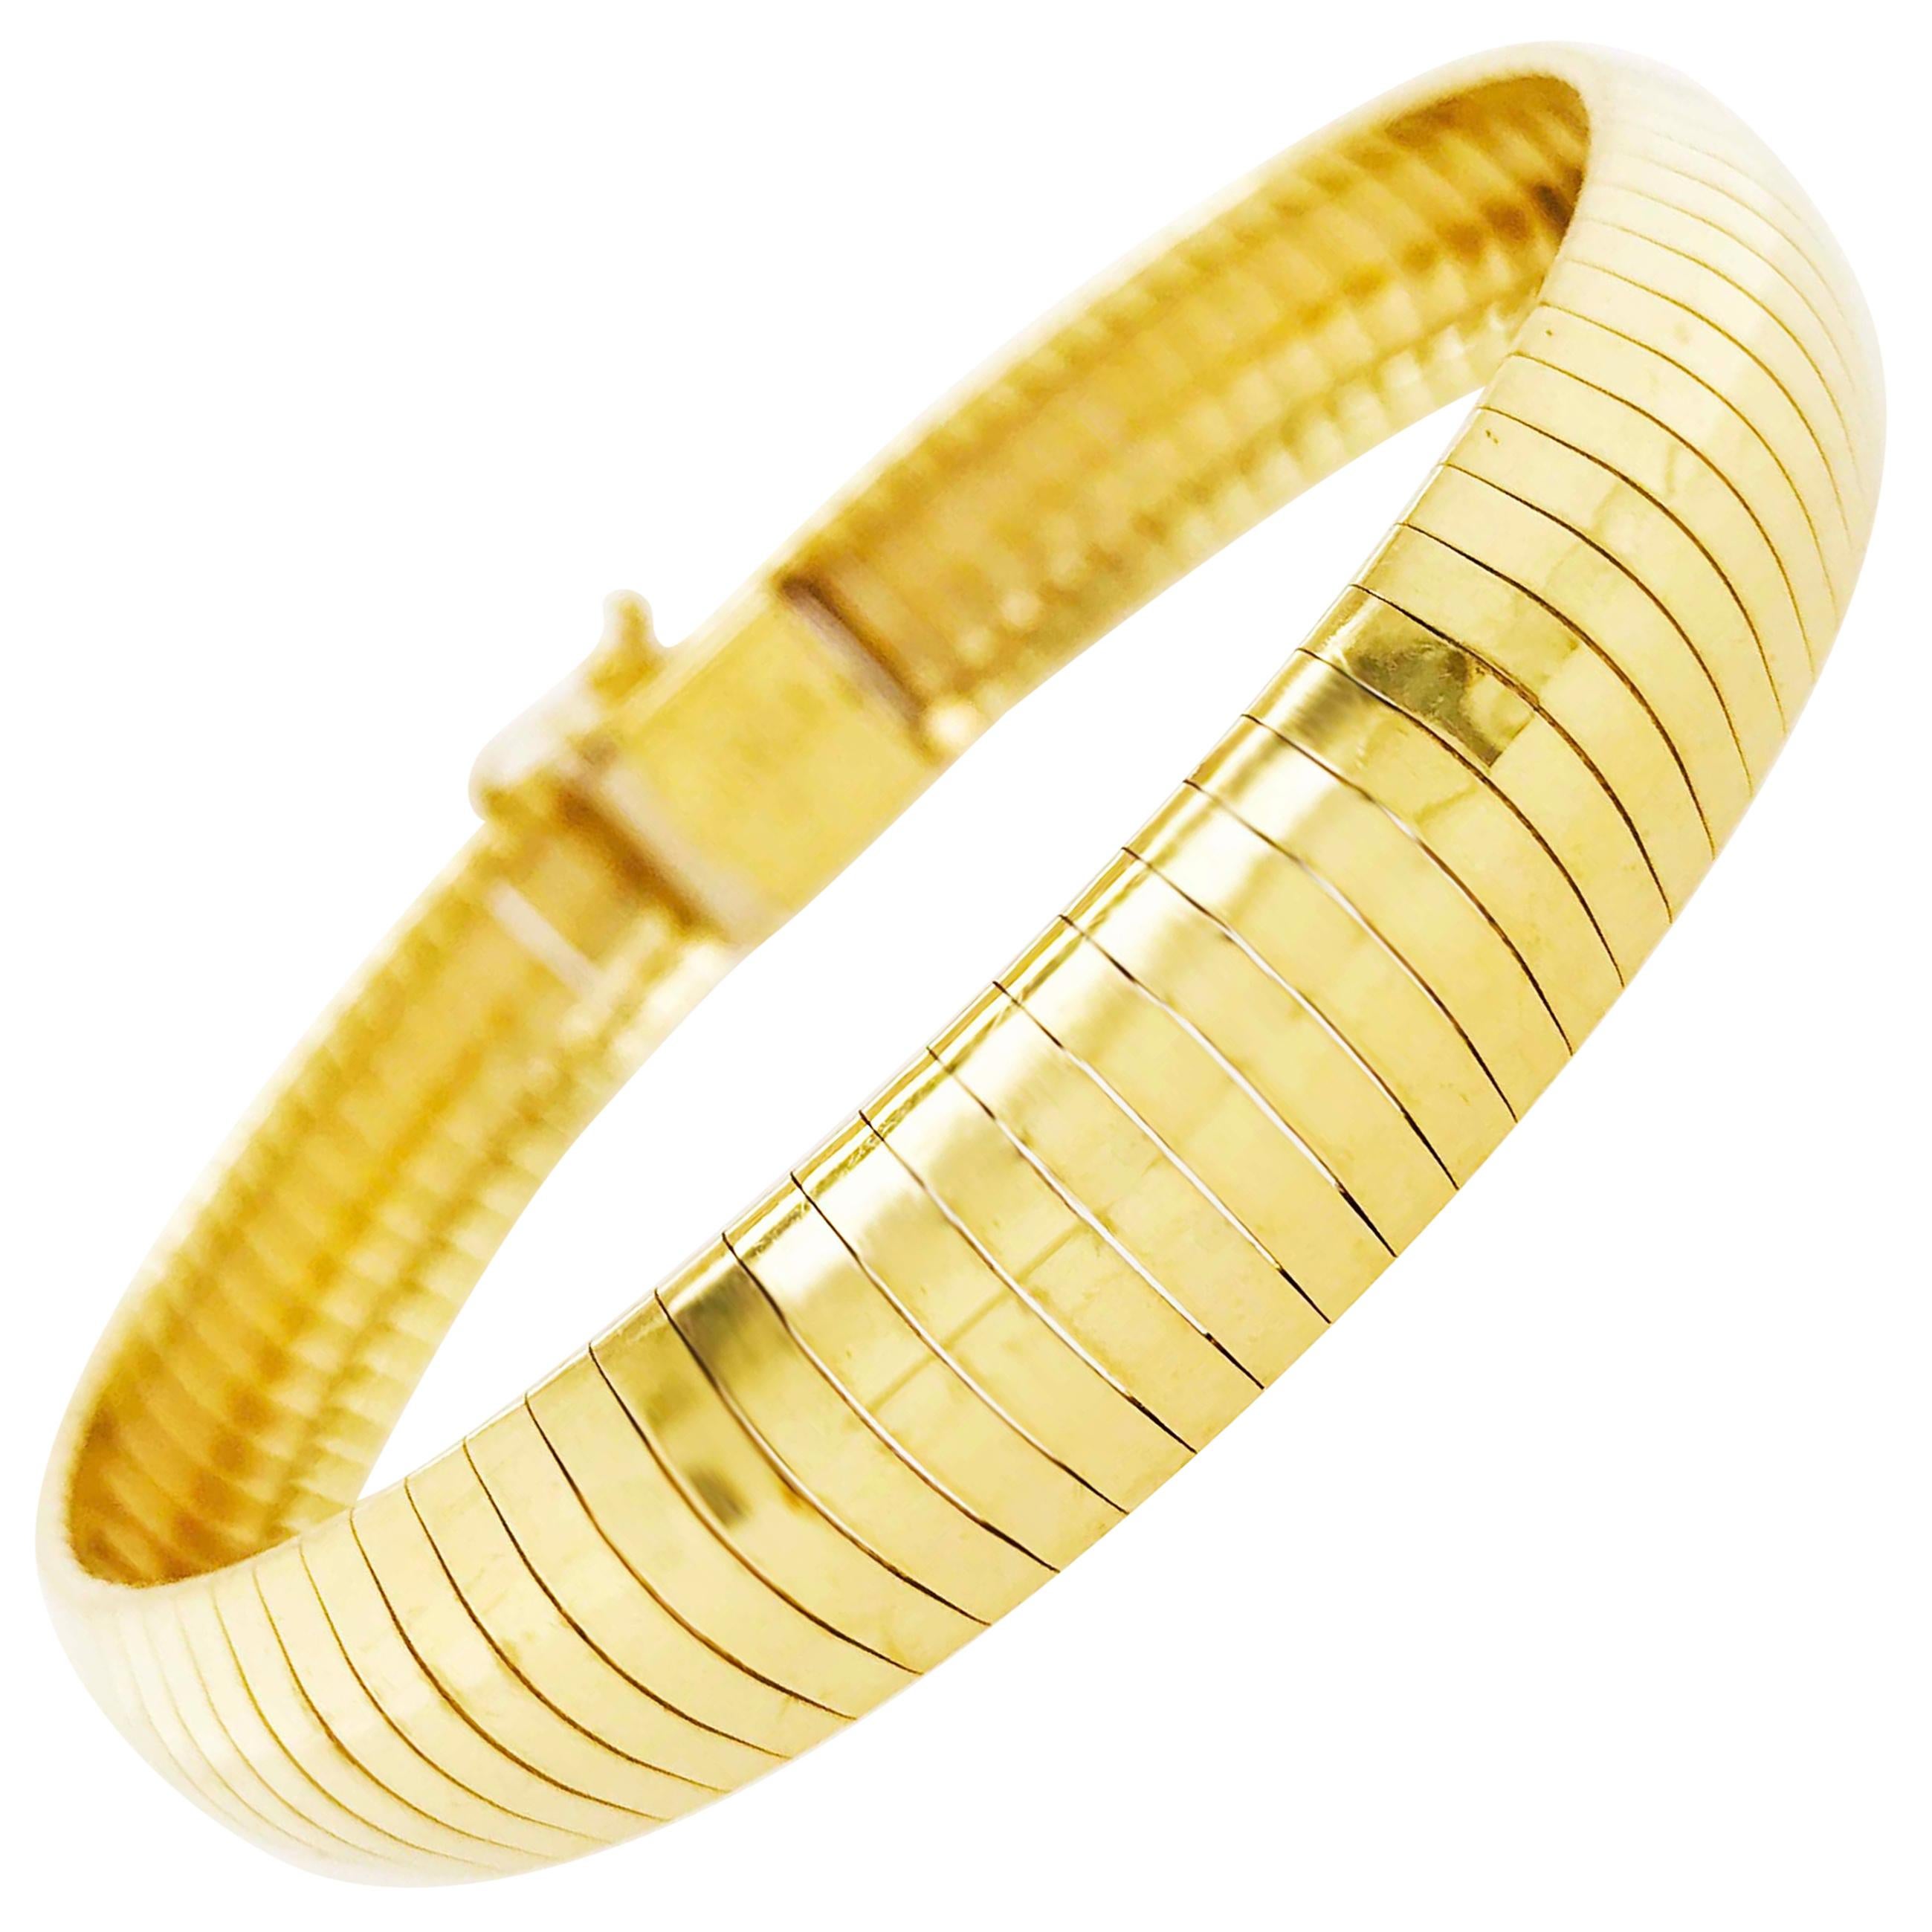 Gold Omega Bracelet in 14 Karat Yellow Gold is Regal and Like a Bangle Bracelet